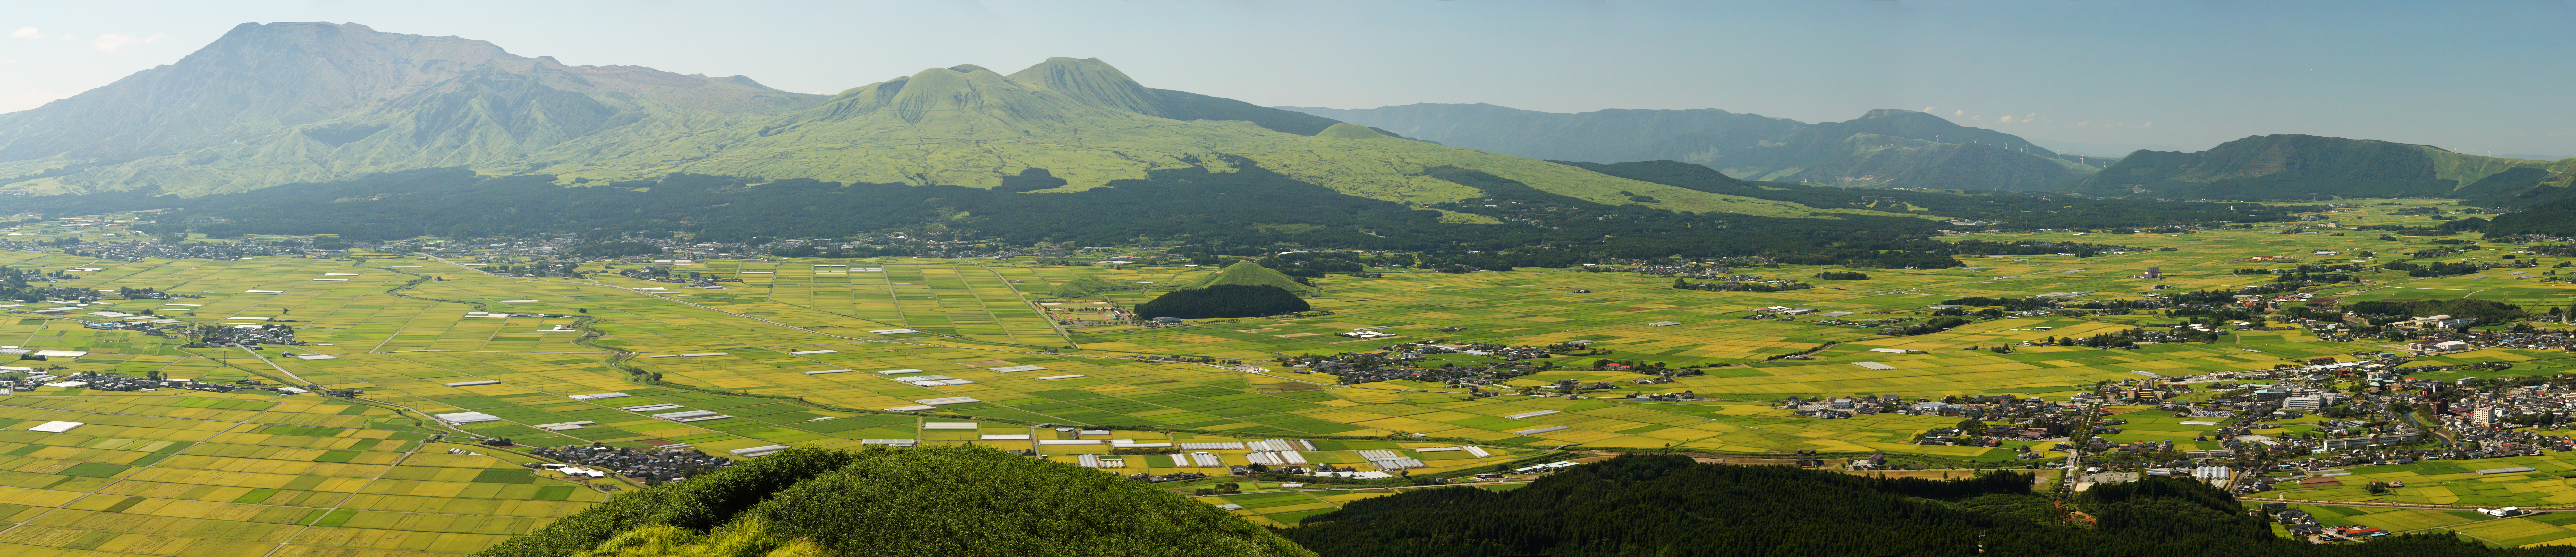 photo, la matire, libre, amnage, dcrivez, photo de la rserve,Aso vue entire, champ du riz, volcan, Un volcan actif, Mt. Aso